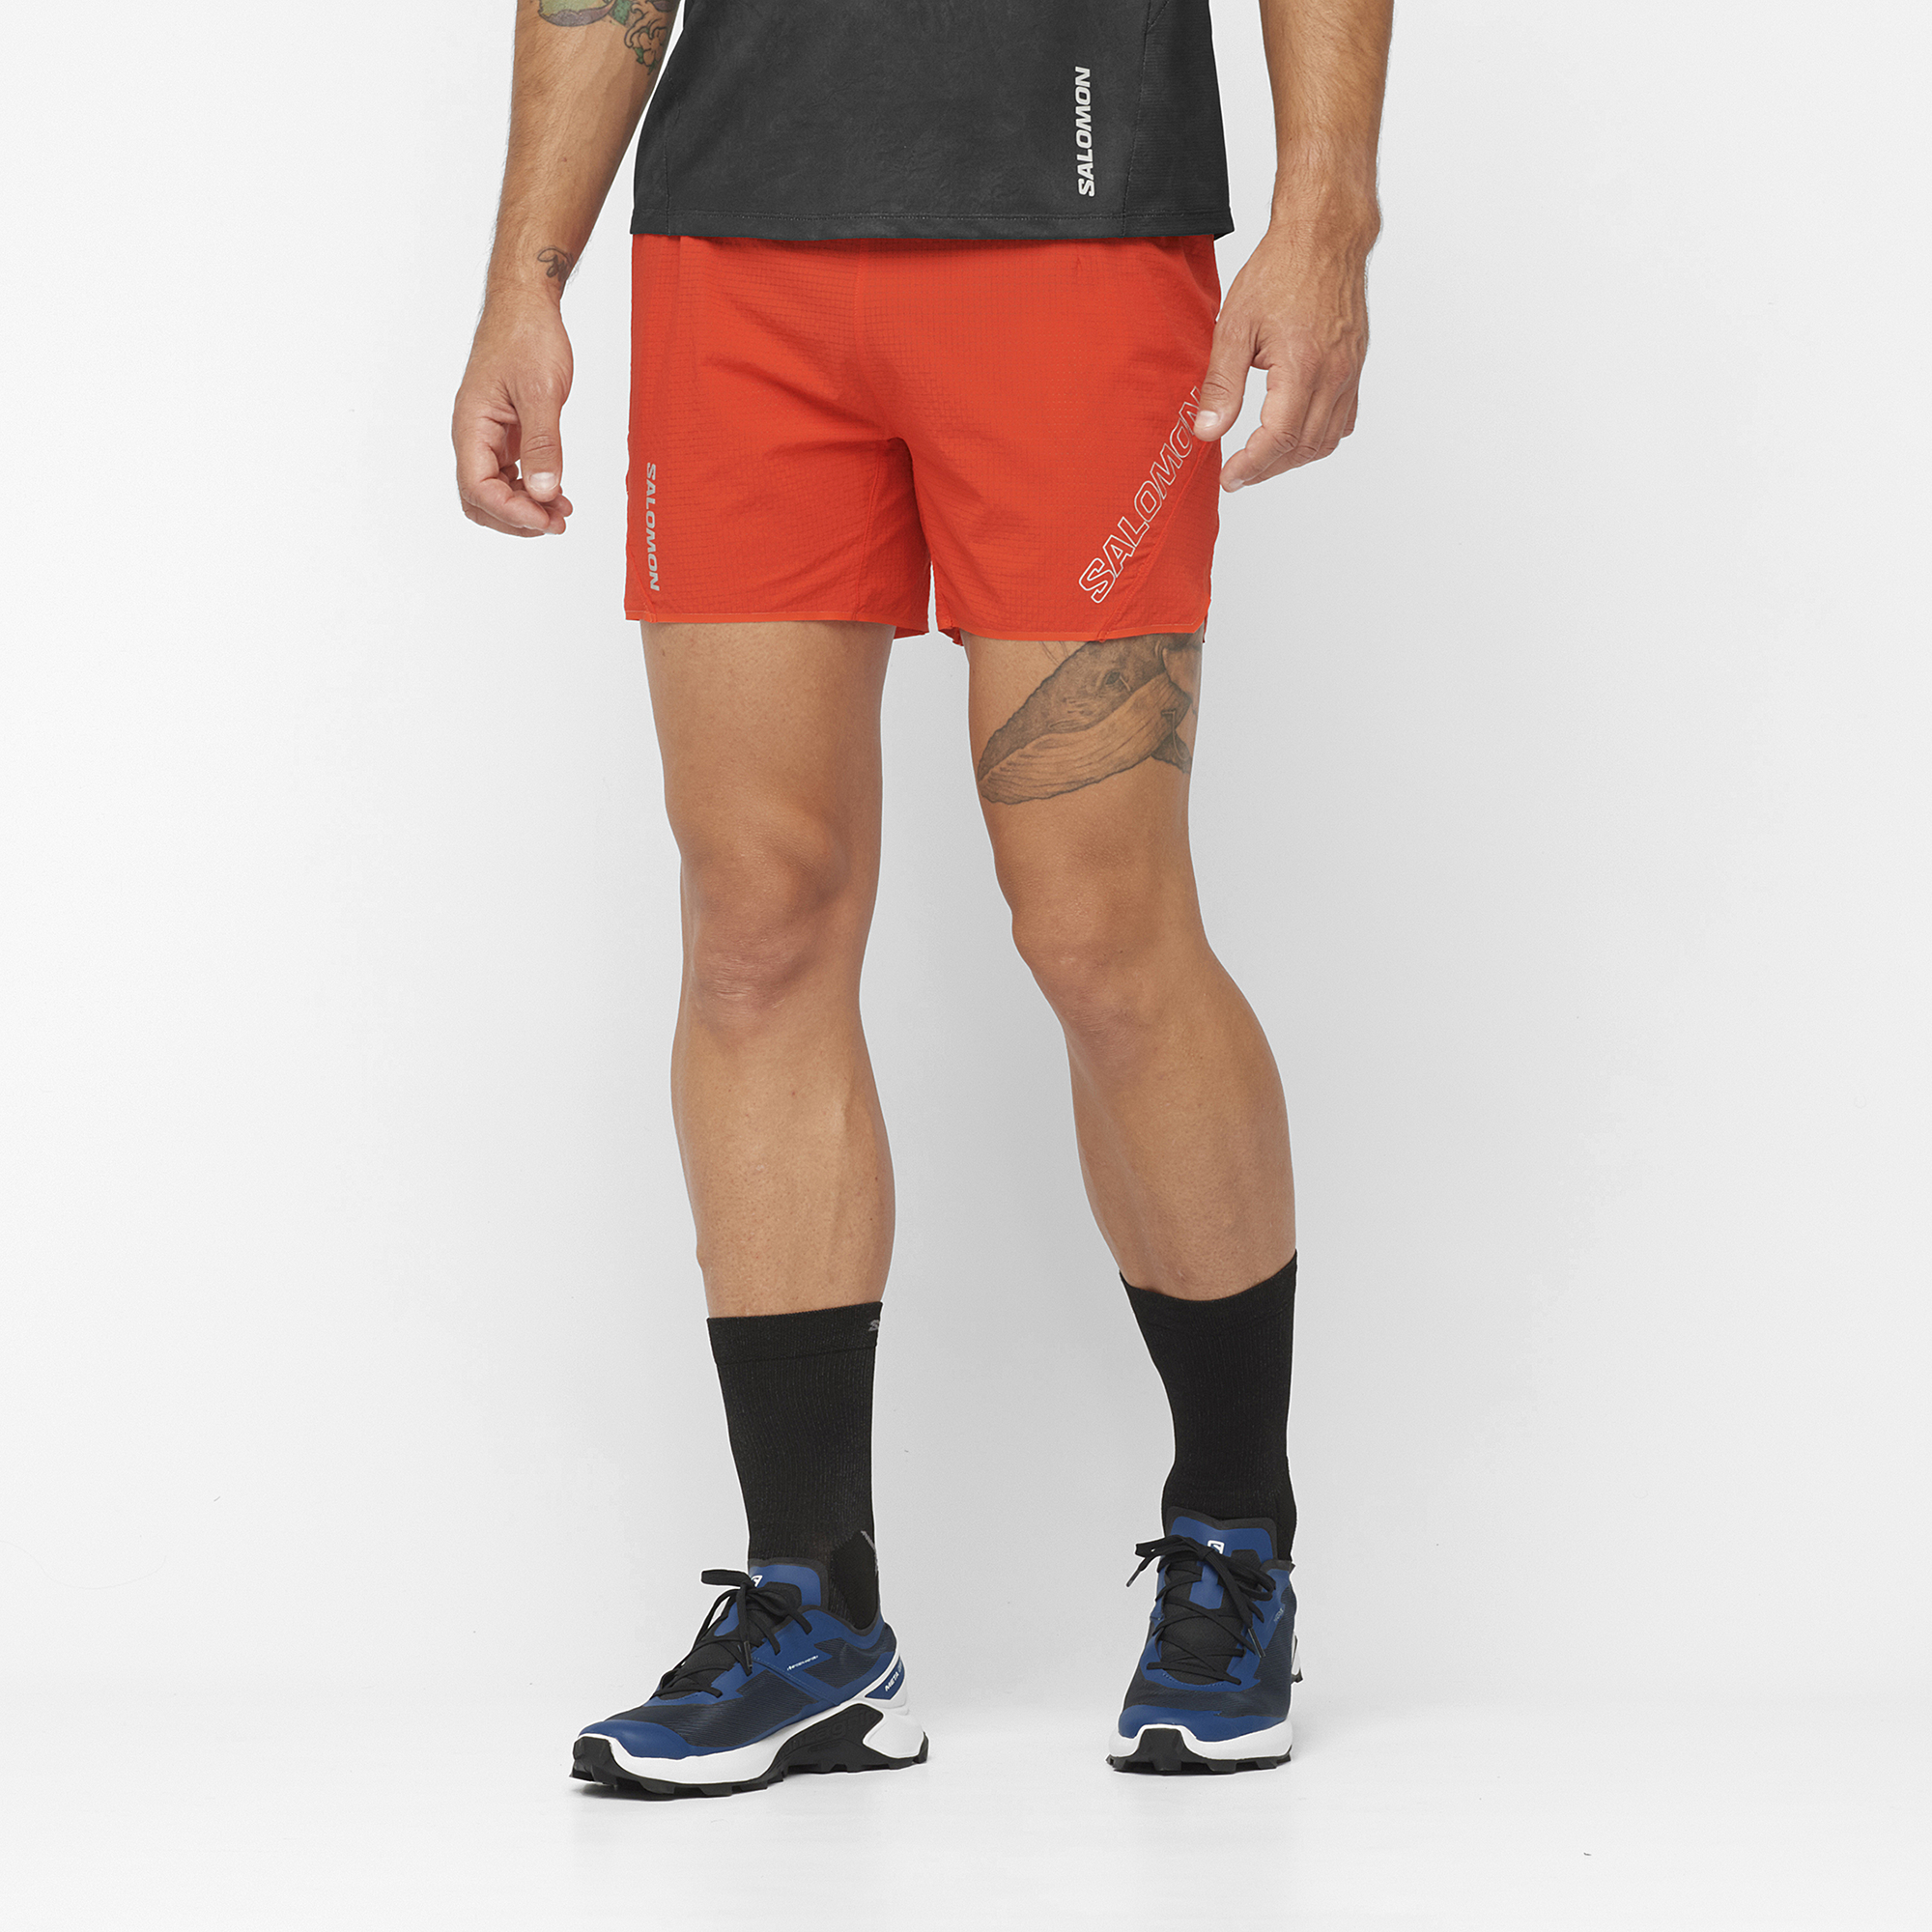 Vuori Ponto Shorts - Men's | REI Co-op